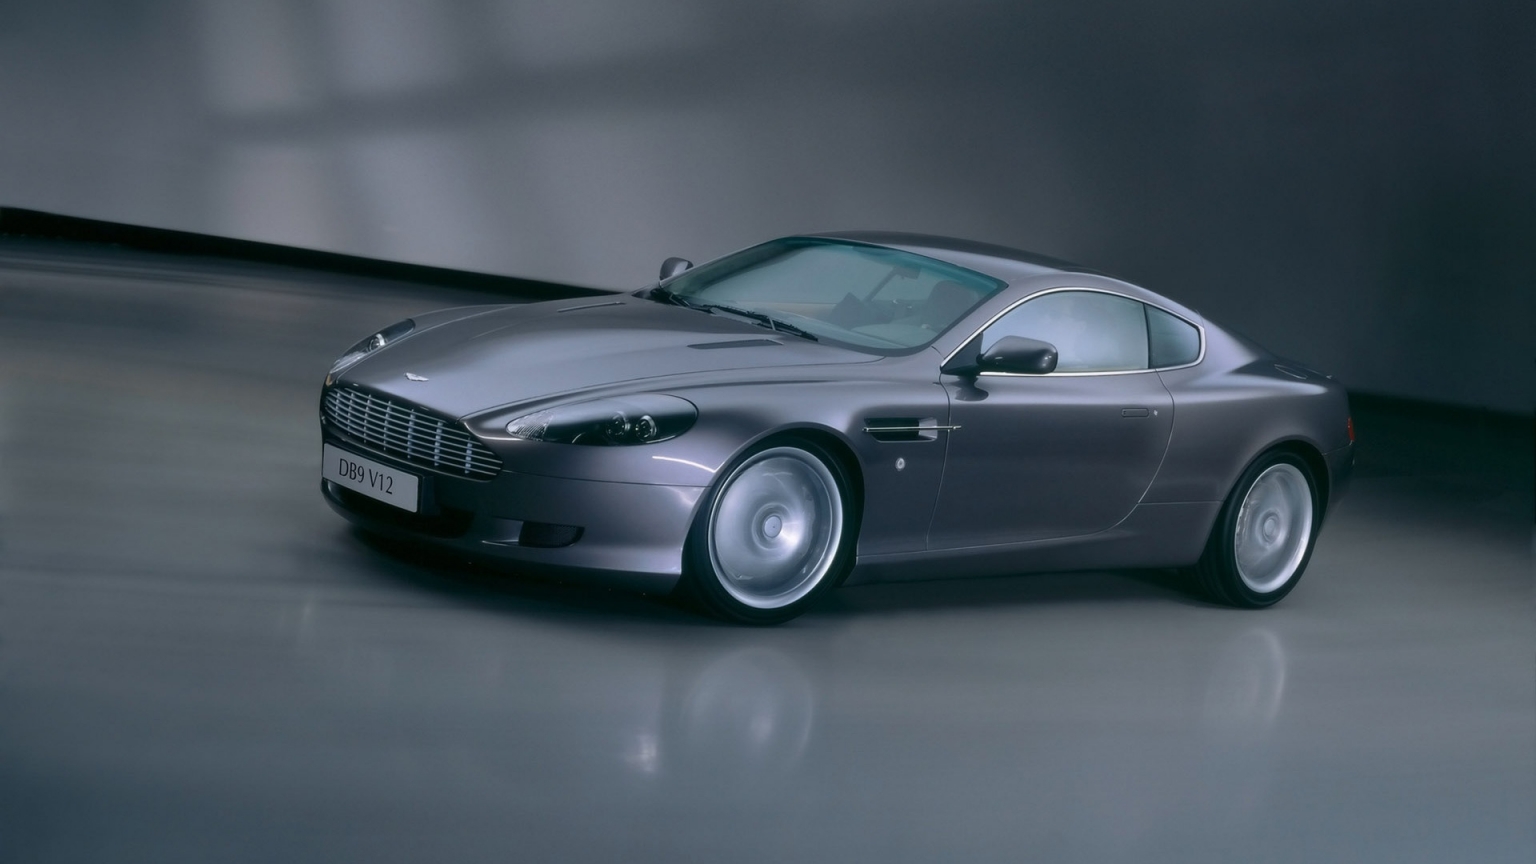 Aston Martin DB9 Speed for 1536 x 864 HDTV resolution